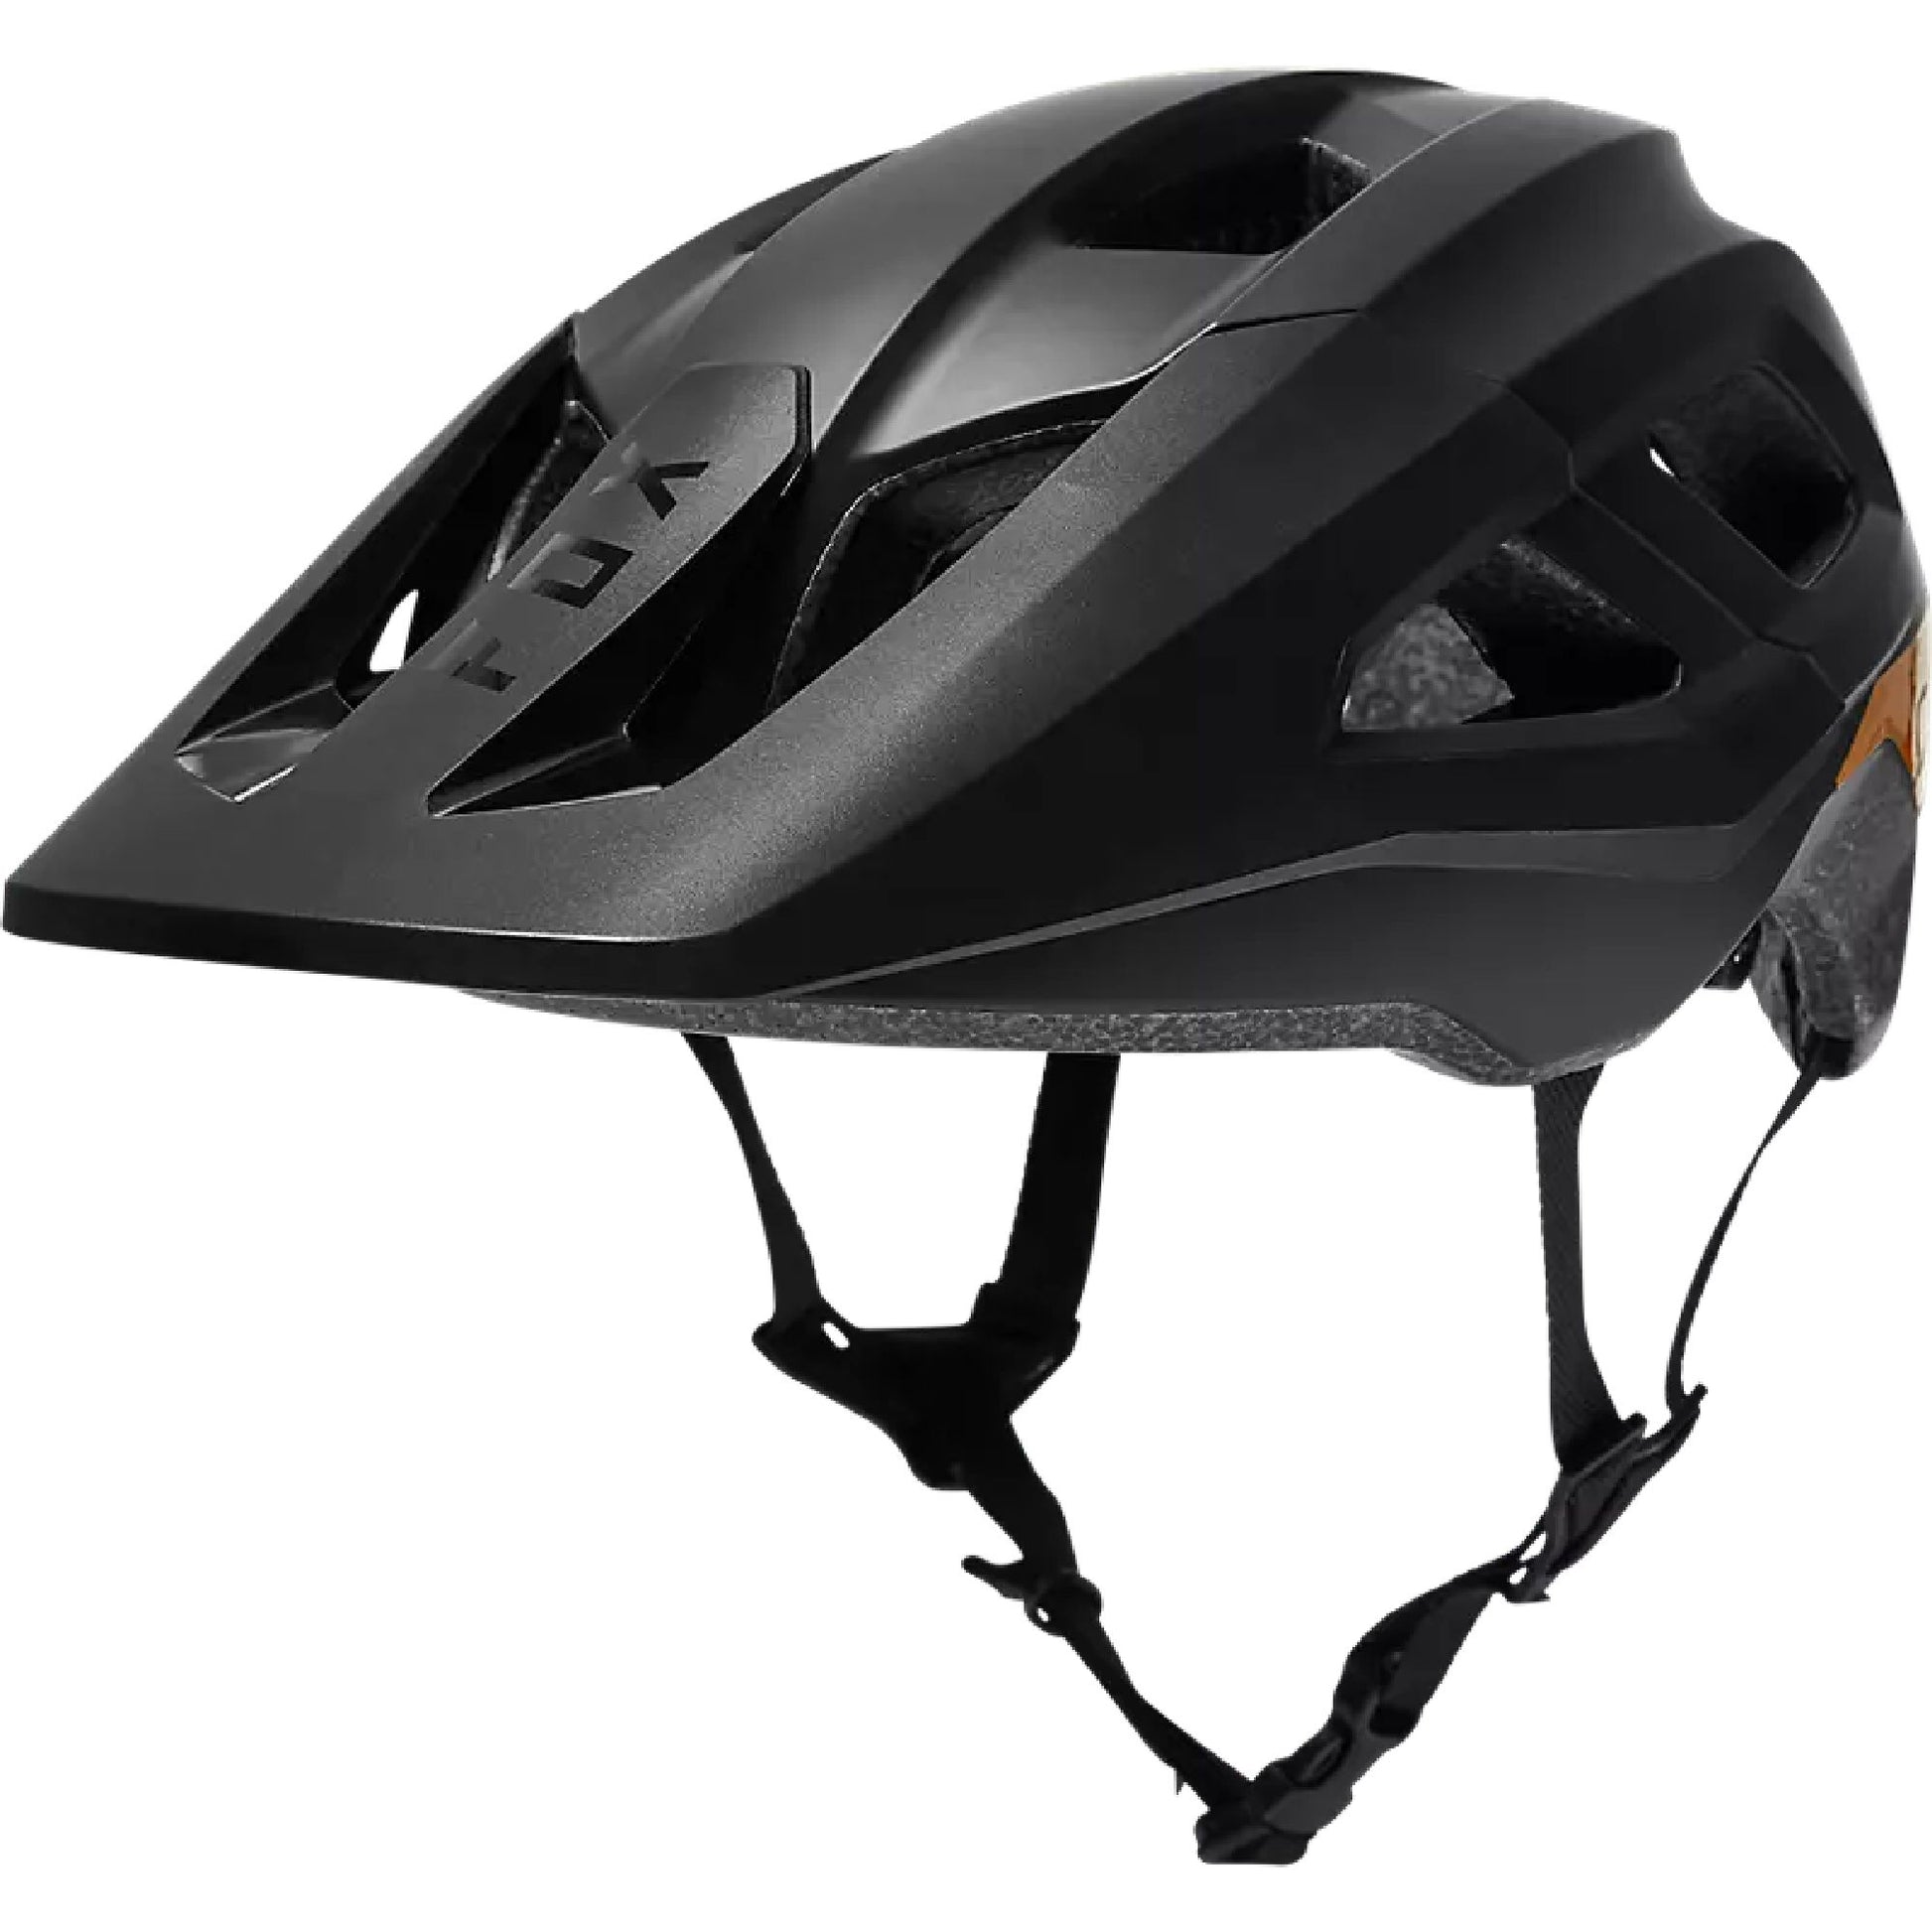 Fox Youth Mainframe Helmet Black Gold OS Bike Helmets